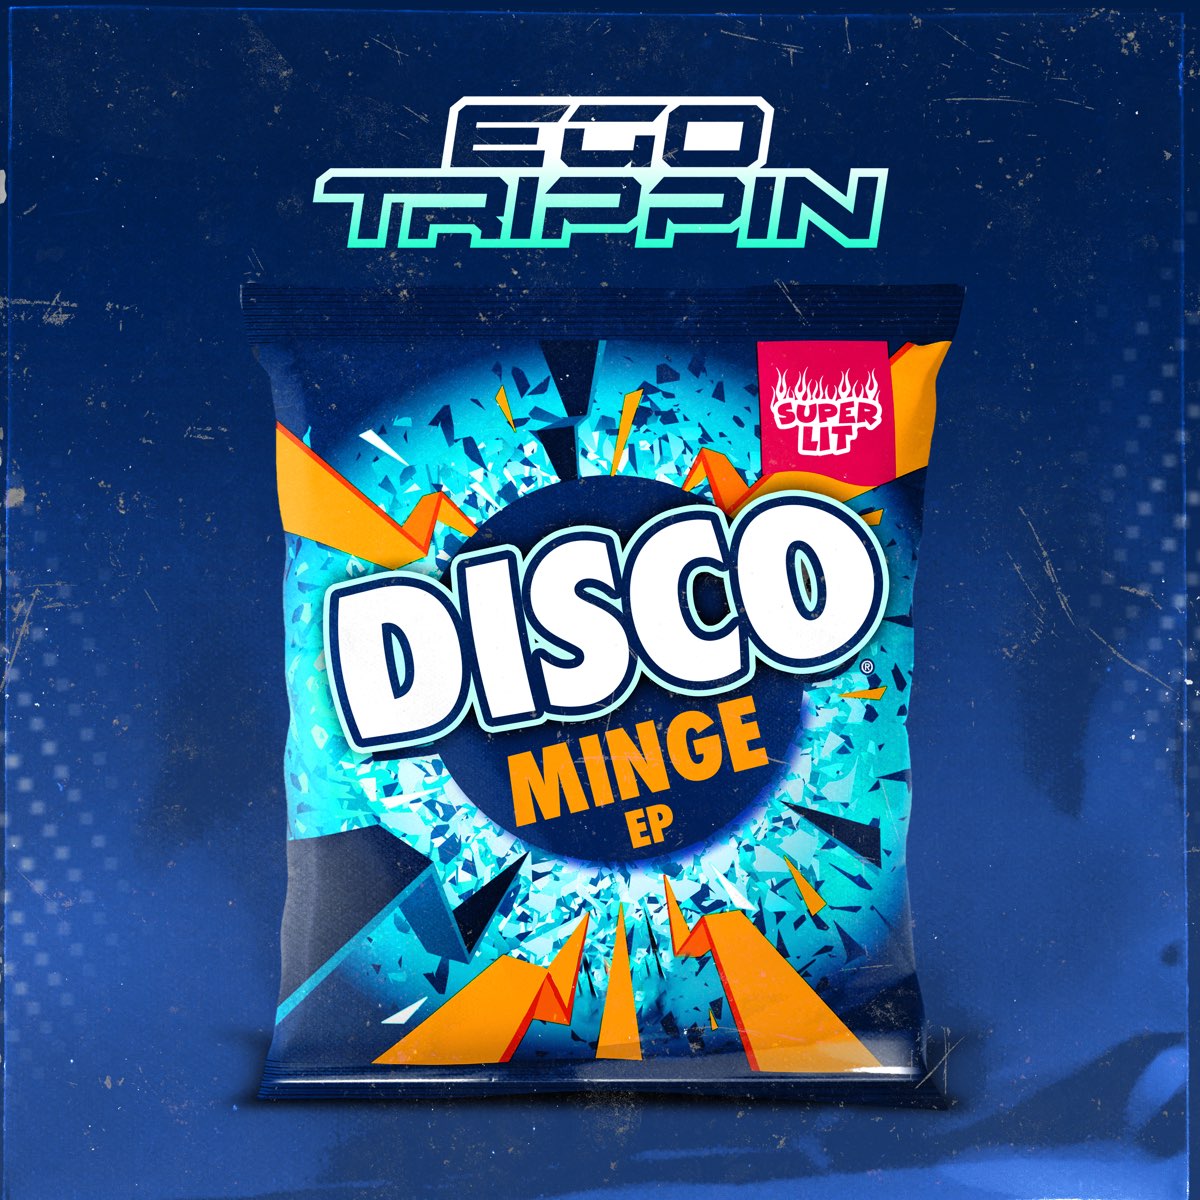 Disco Minge - EP - Album by Ego Trippin - Apple Music